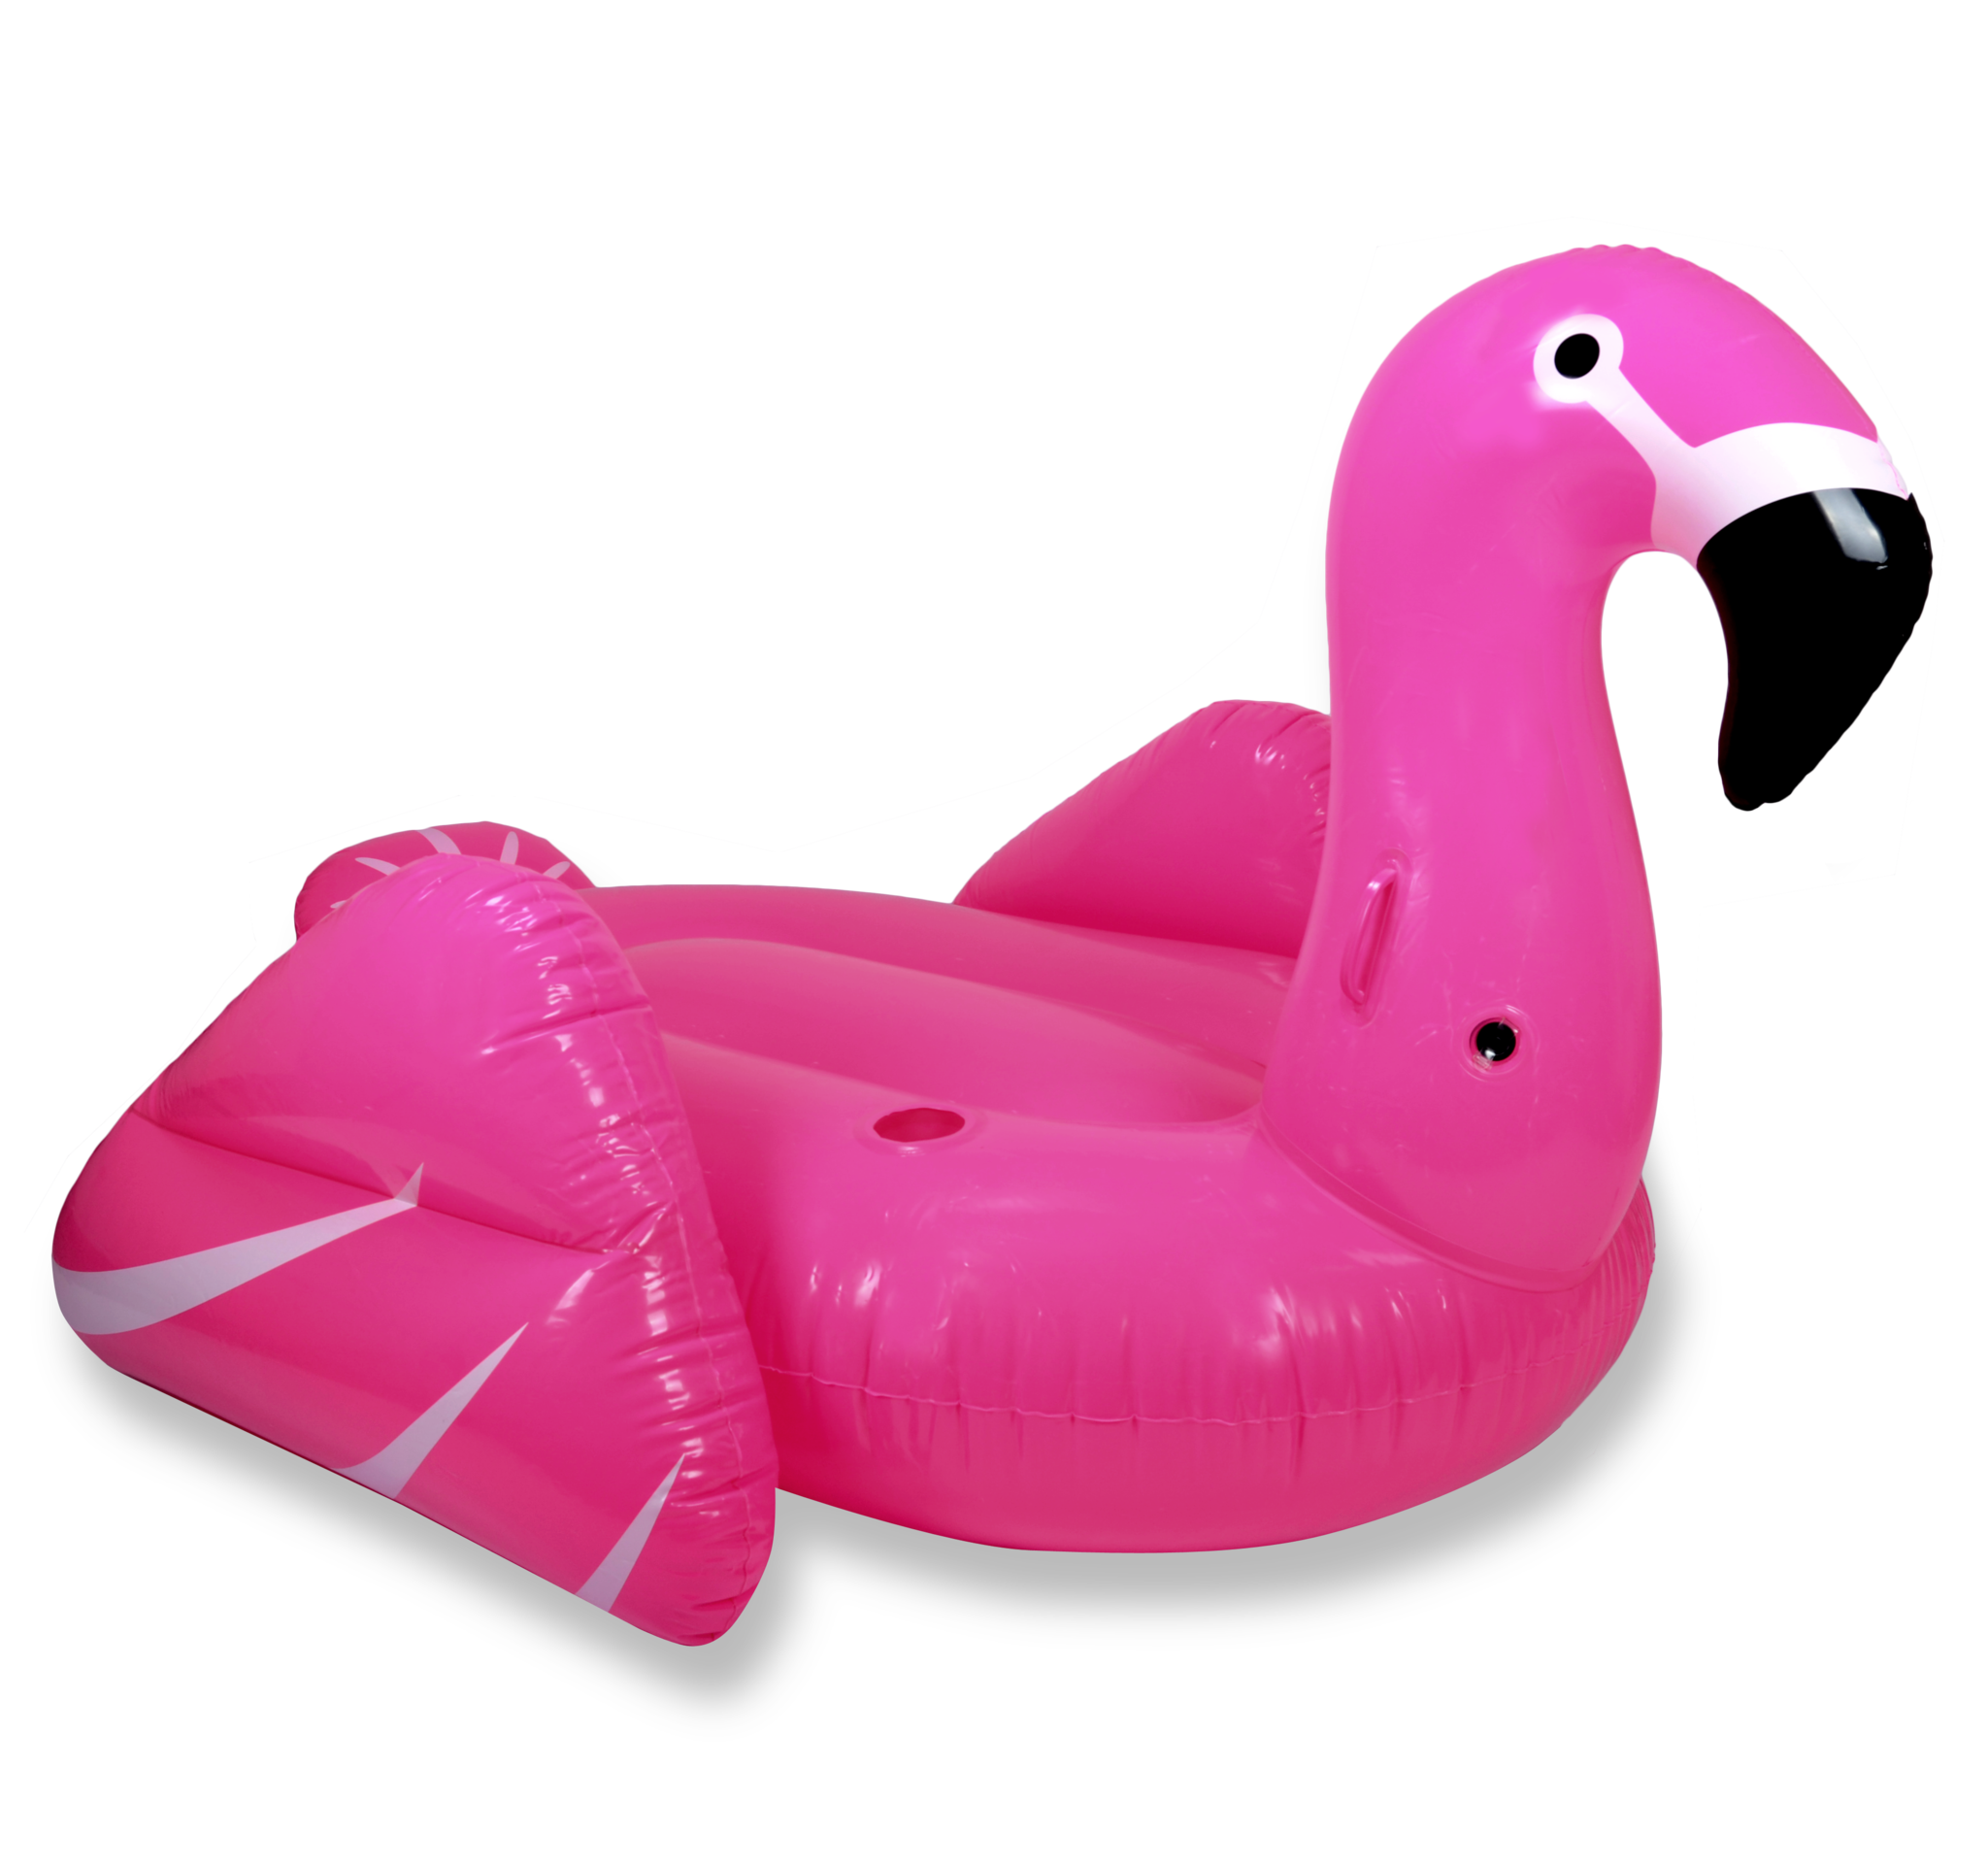 Надувные игрушки. Flamingo Pool Float. Надувная игрушка Фламинго. Фламинго игрушка резиновая. Надувные игрушки на прозрачном фоне.